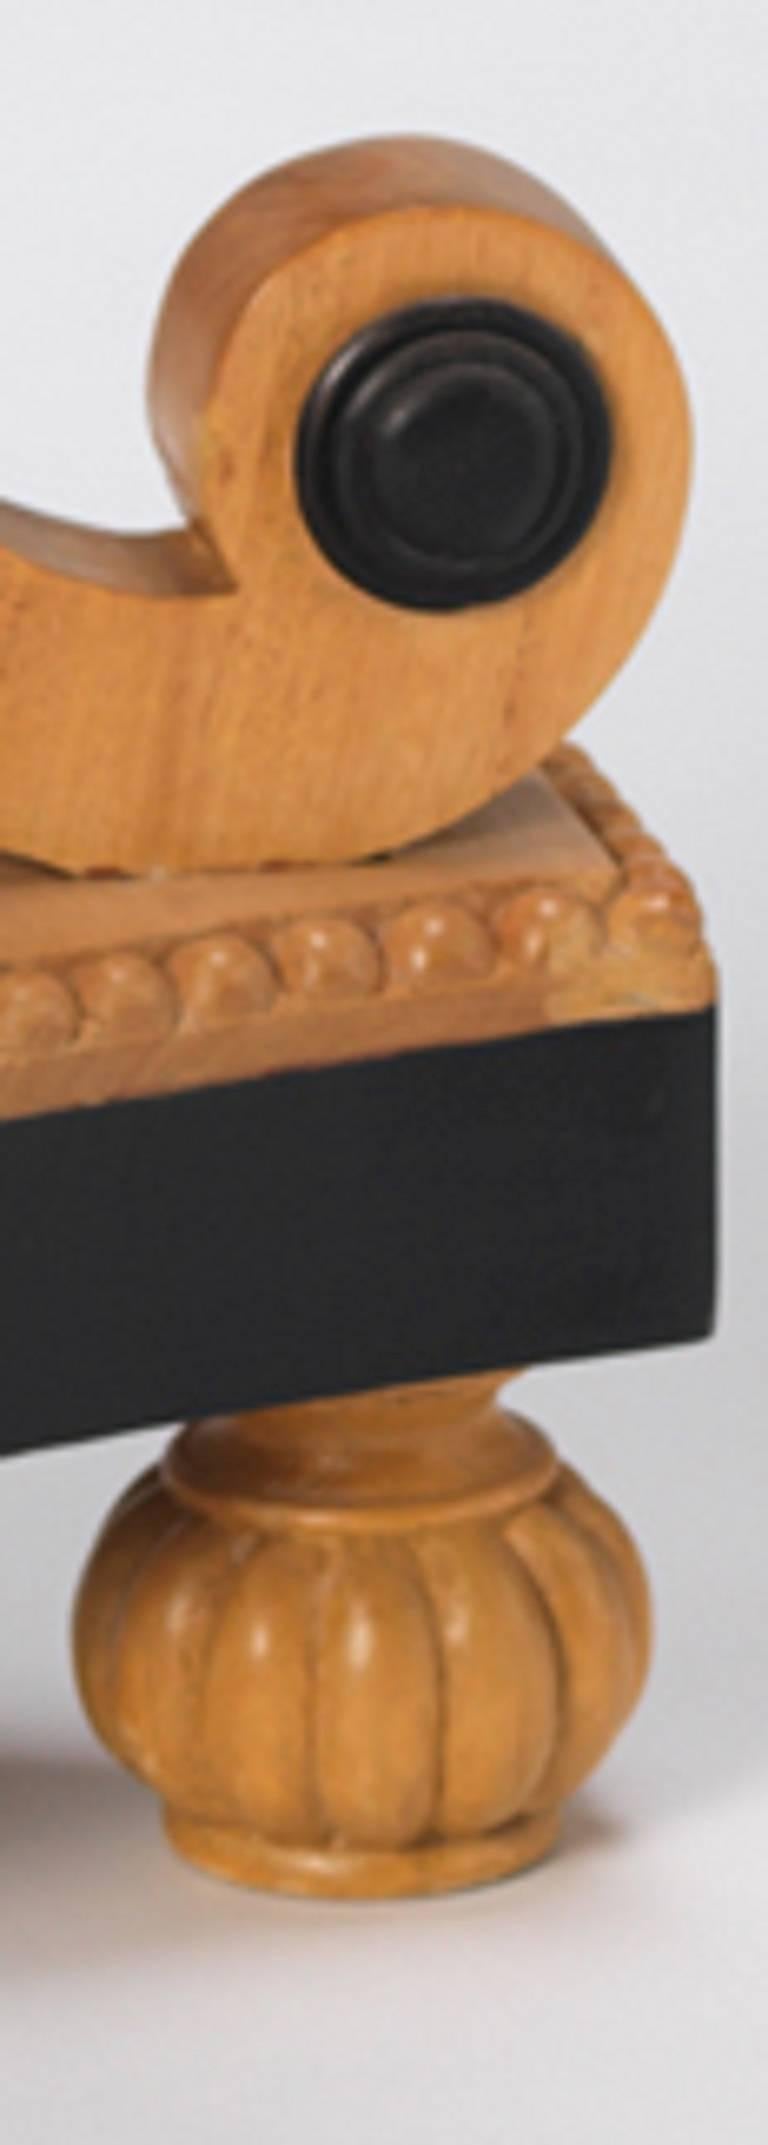 Neoclassical Revival Pair of Pedestal or Lamp Tables in the Biedermeier Manner For Sale